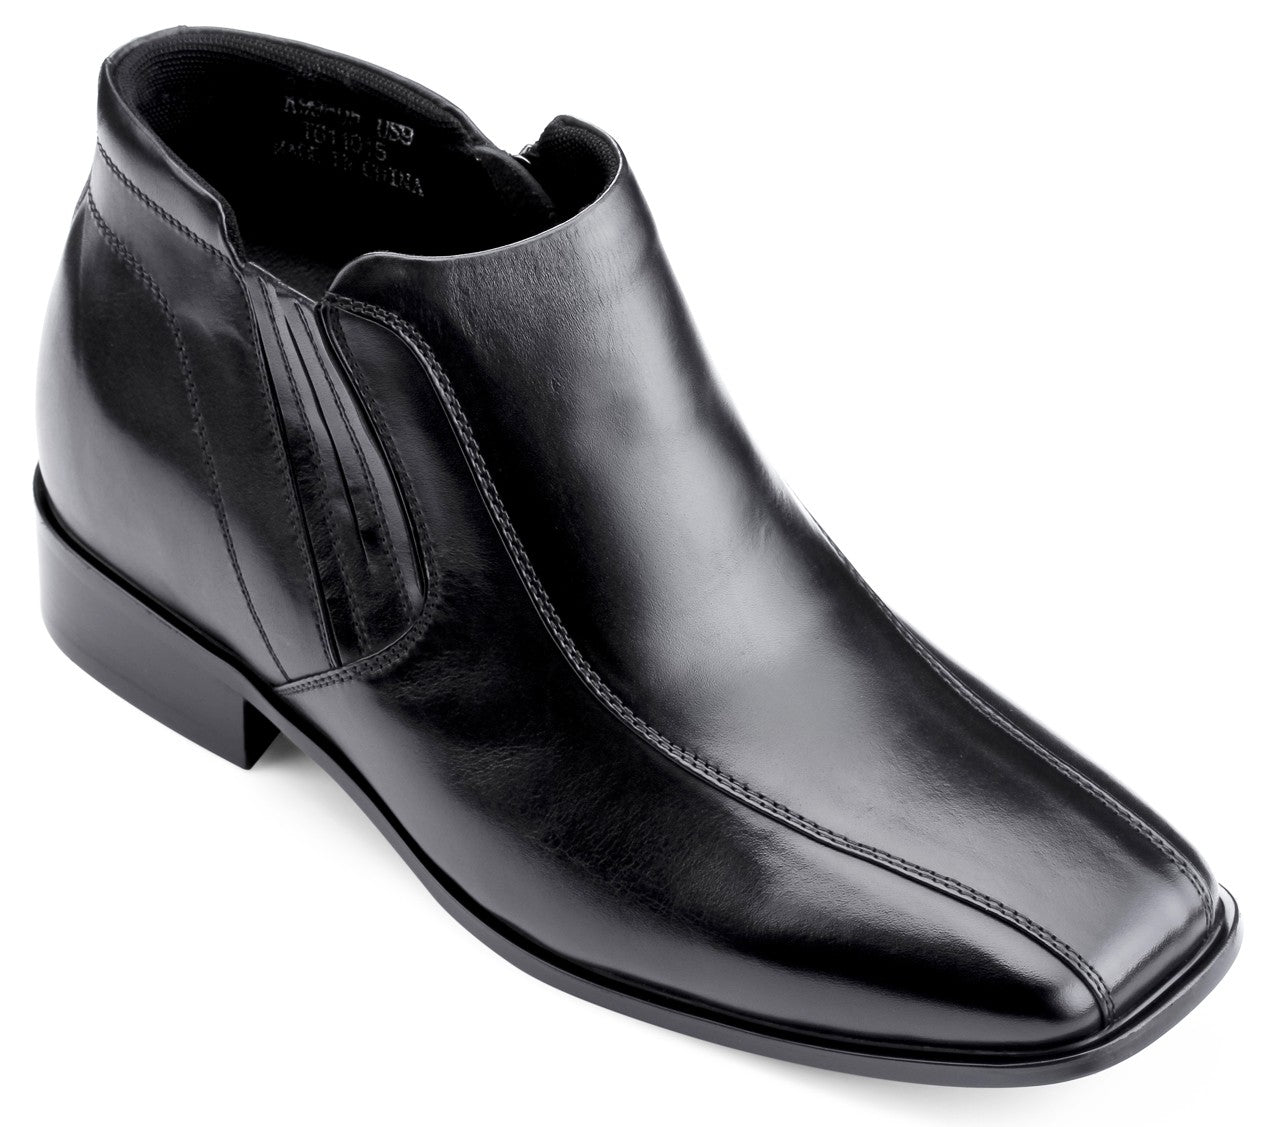 CALDEN - K99805 - 3.2 Inches Taller (Black) Zipper Boots Elevator Shoes ...